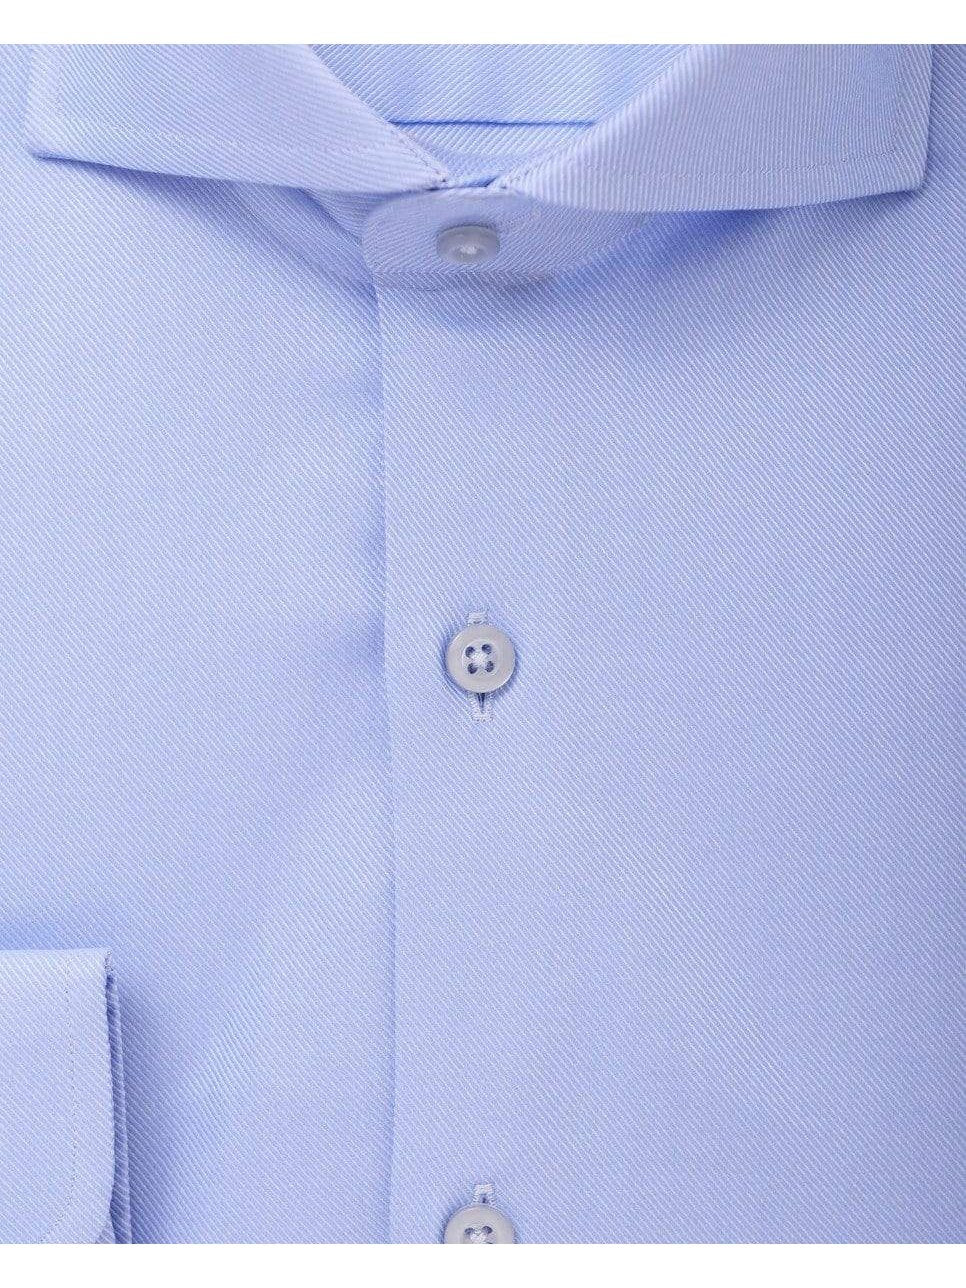 Modena SHIRTS Mens Cotton Blend Blue Cutaway Collar Slim Fit Dress Shirt